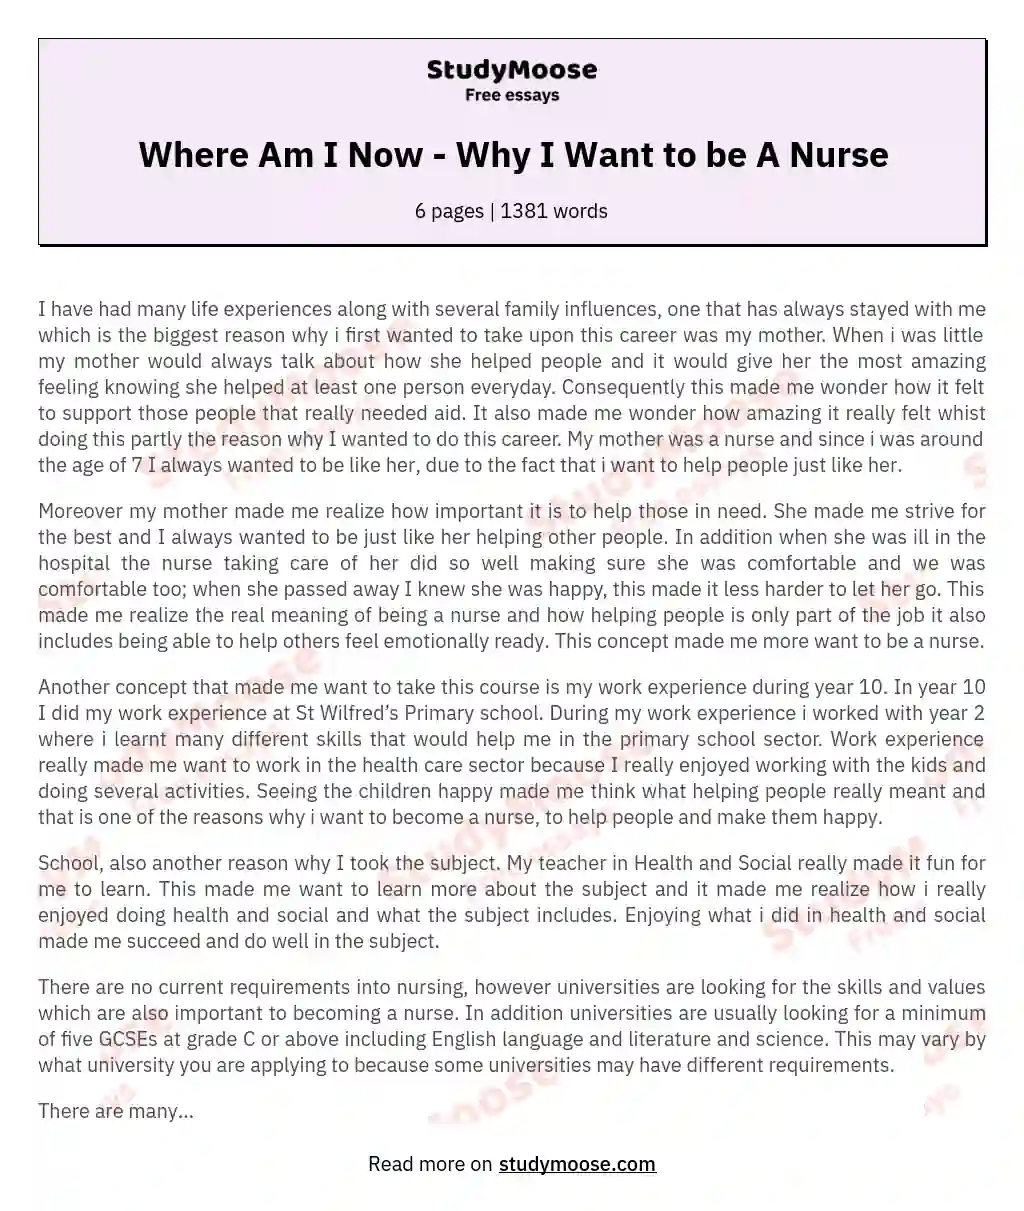 Where Am I Now - Why I Want to be A Nurse essay